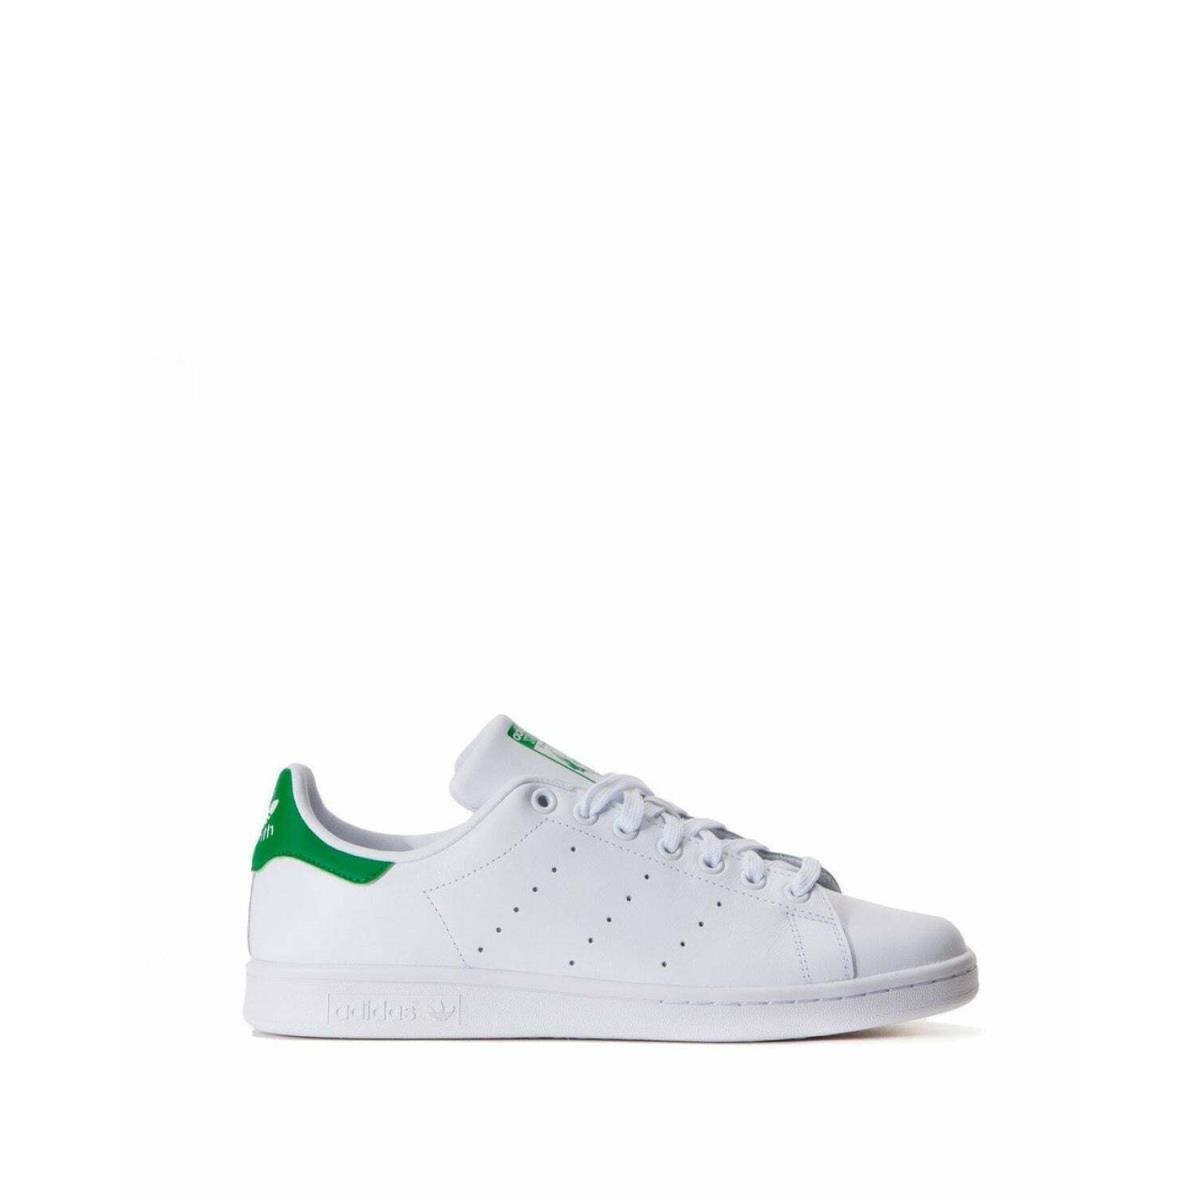 Adidas Originals Stan Smith M20324 Men`s Cloud White/green Shoes US6.5/UK6